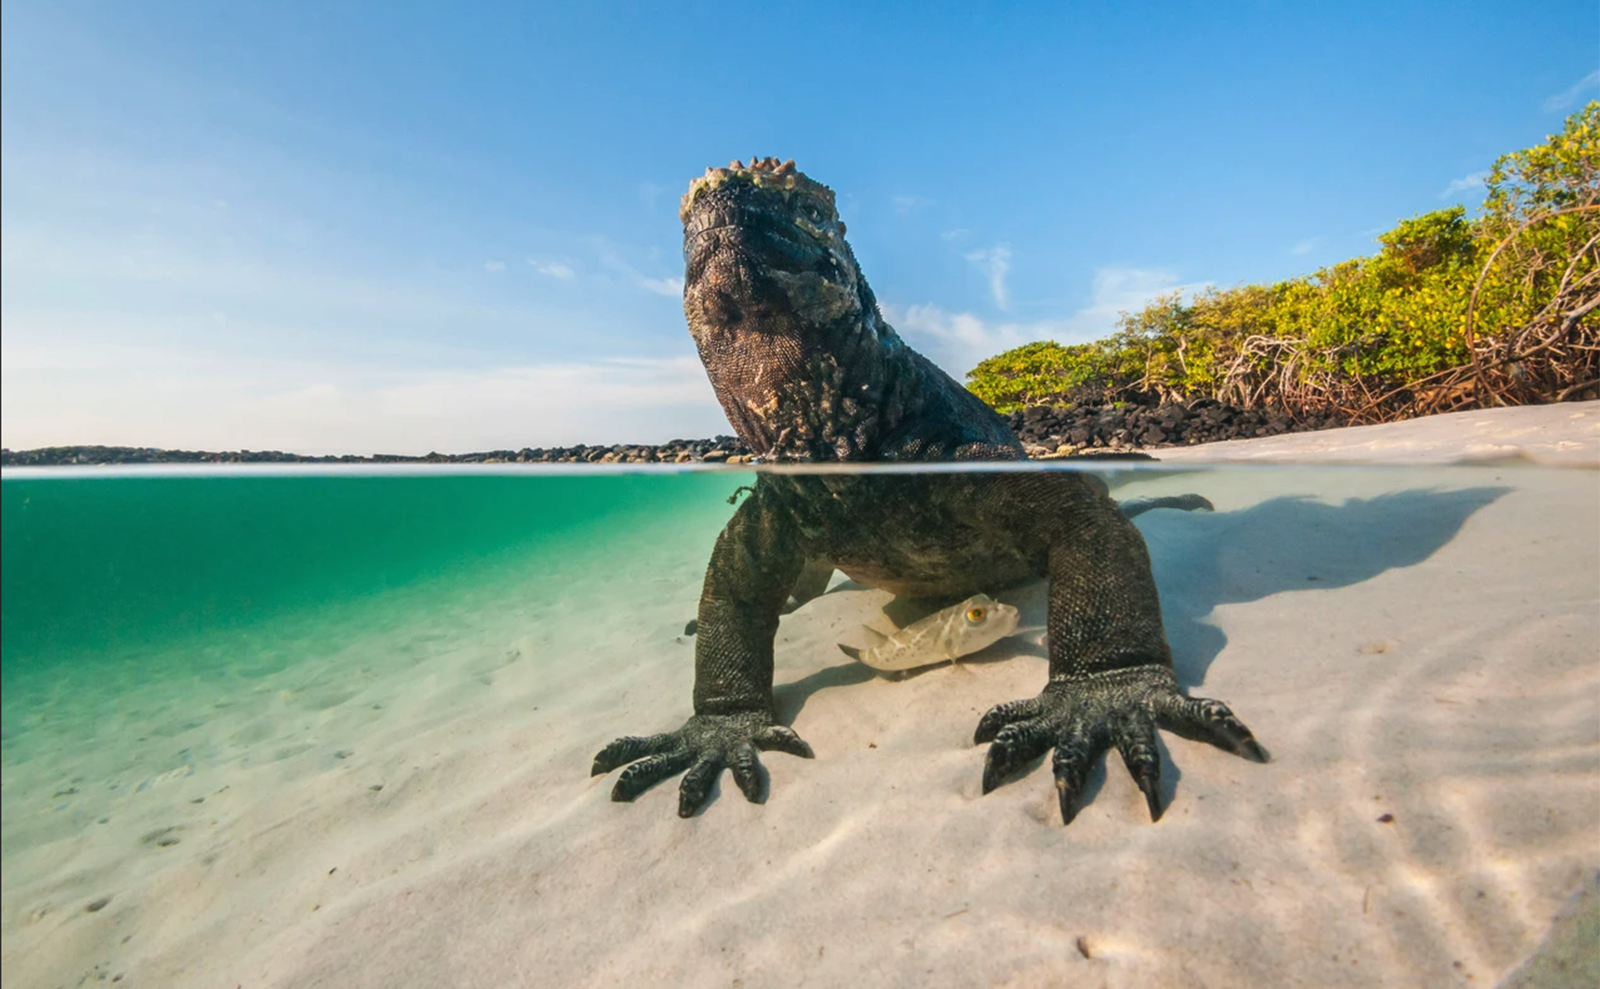  iguana in the water in galapagos